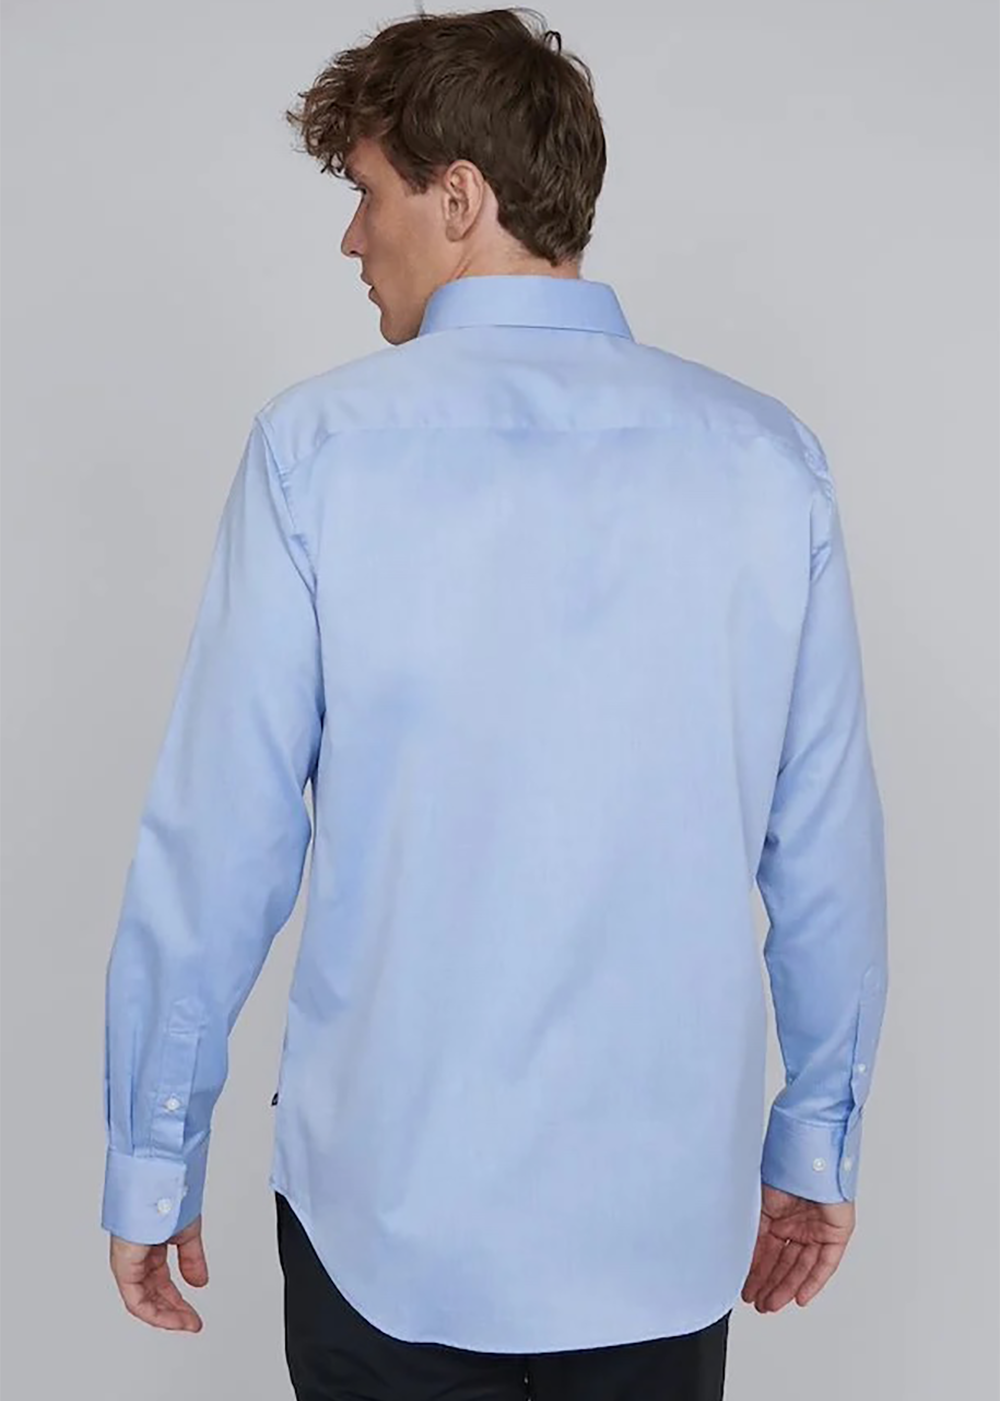 Trostol City Twill Shirt - Chambrey Blue - Matinique Canada - Danali - 38365 - 30200598